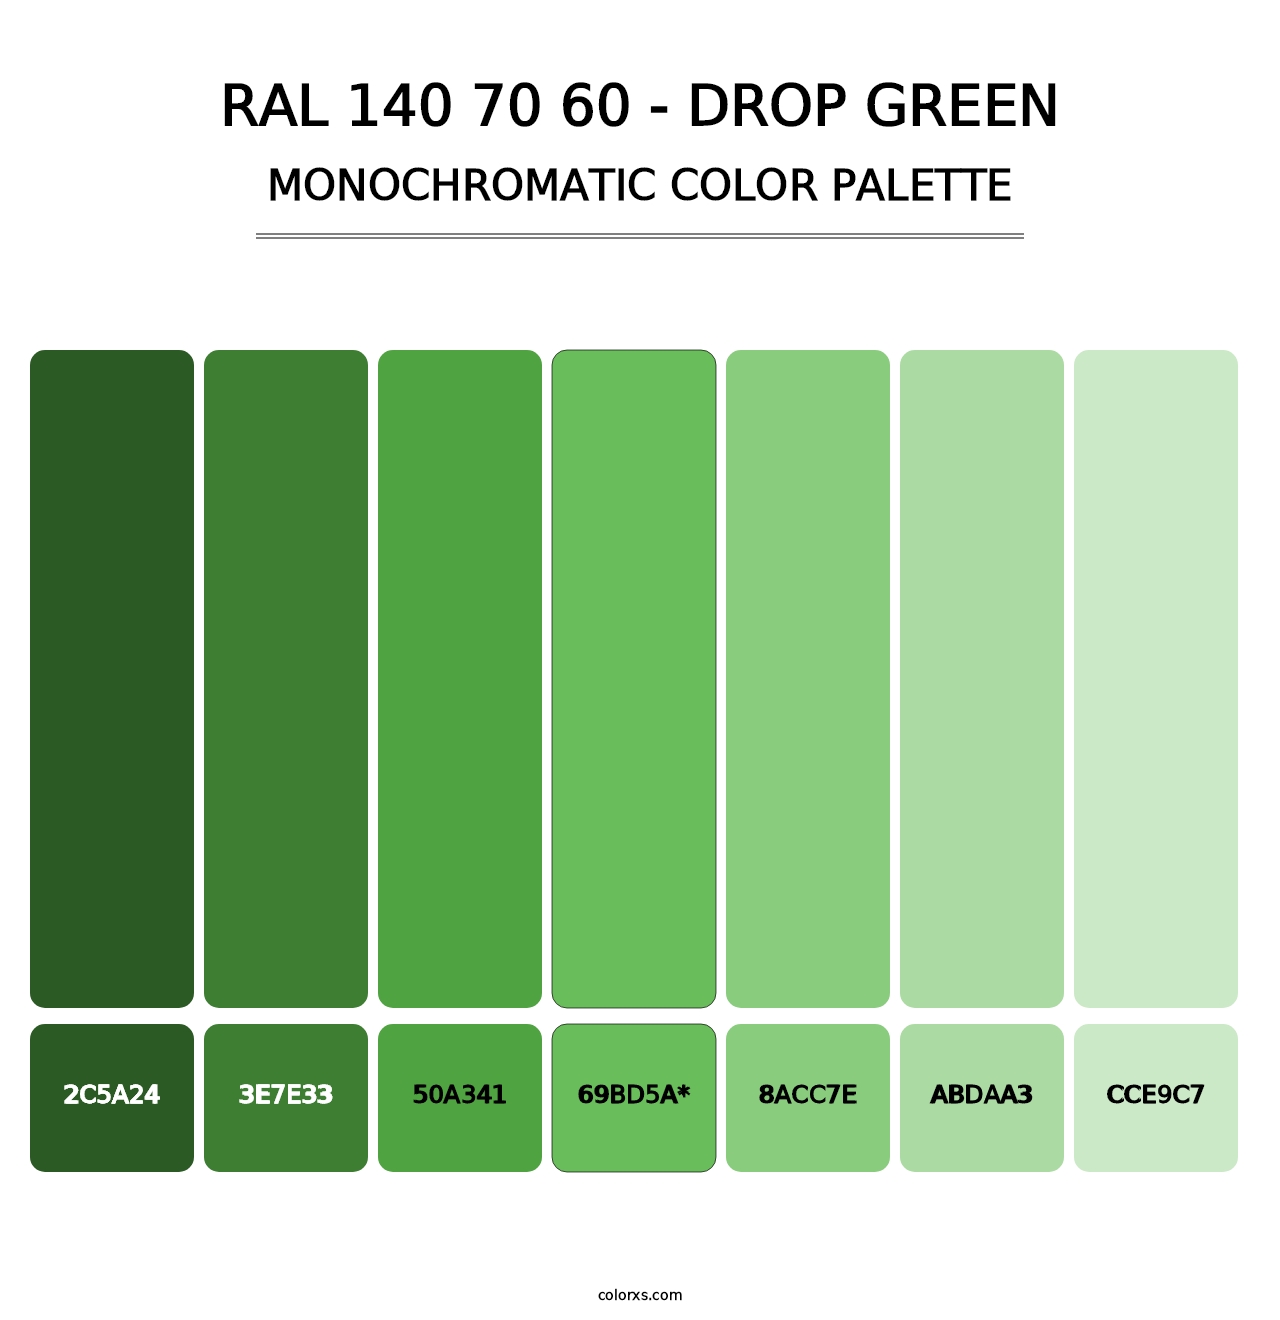 RAL 140 70 60 - Drop Green - Monochromatic Color Palette